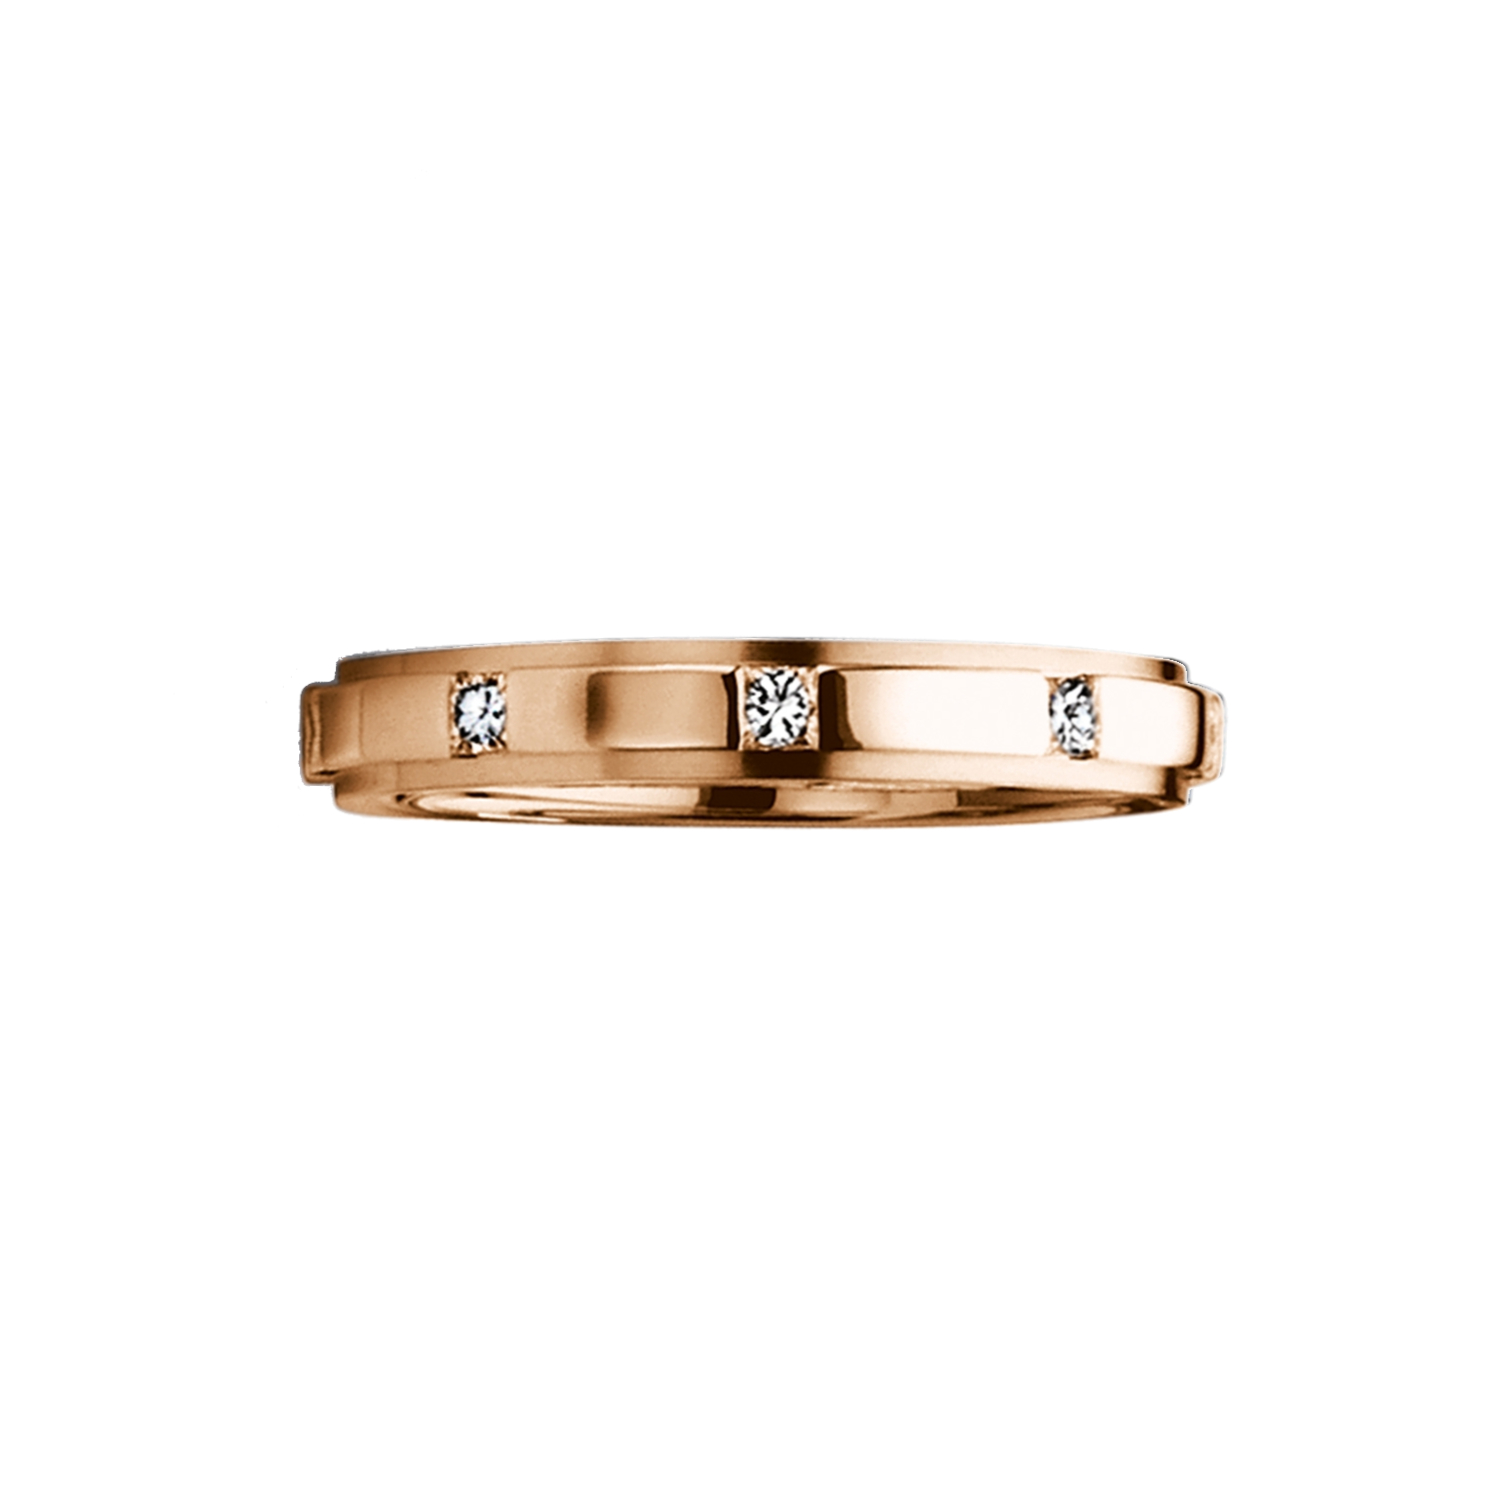  FURRER JACOT, Wedding rings, SKU: 71-83110-0-0/030-73-0-55-3 | watchapproach.com